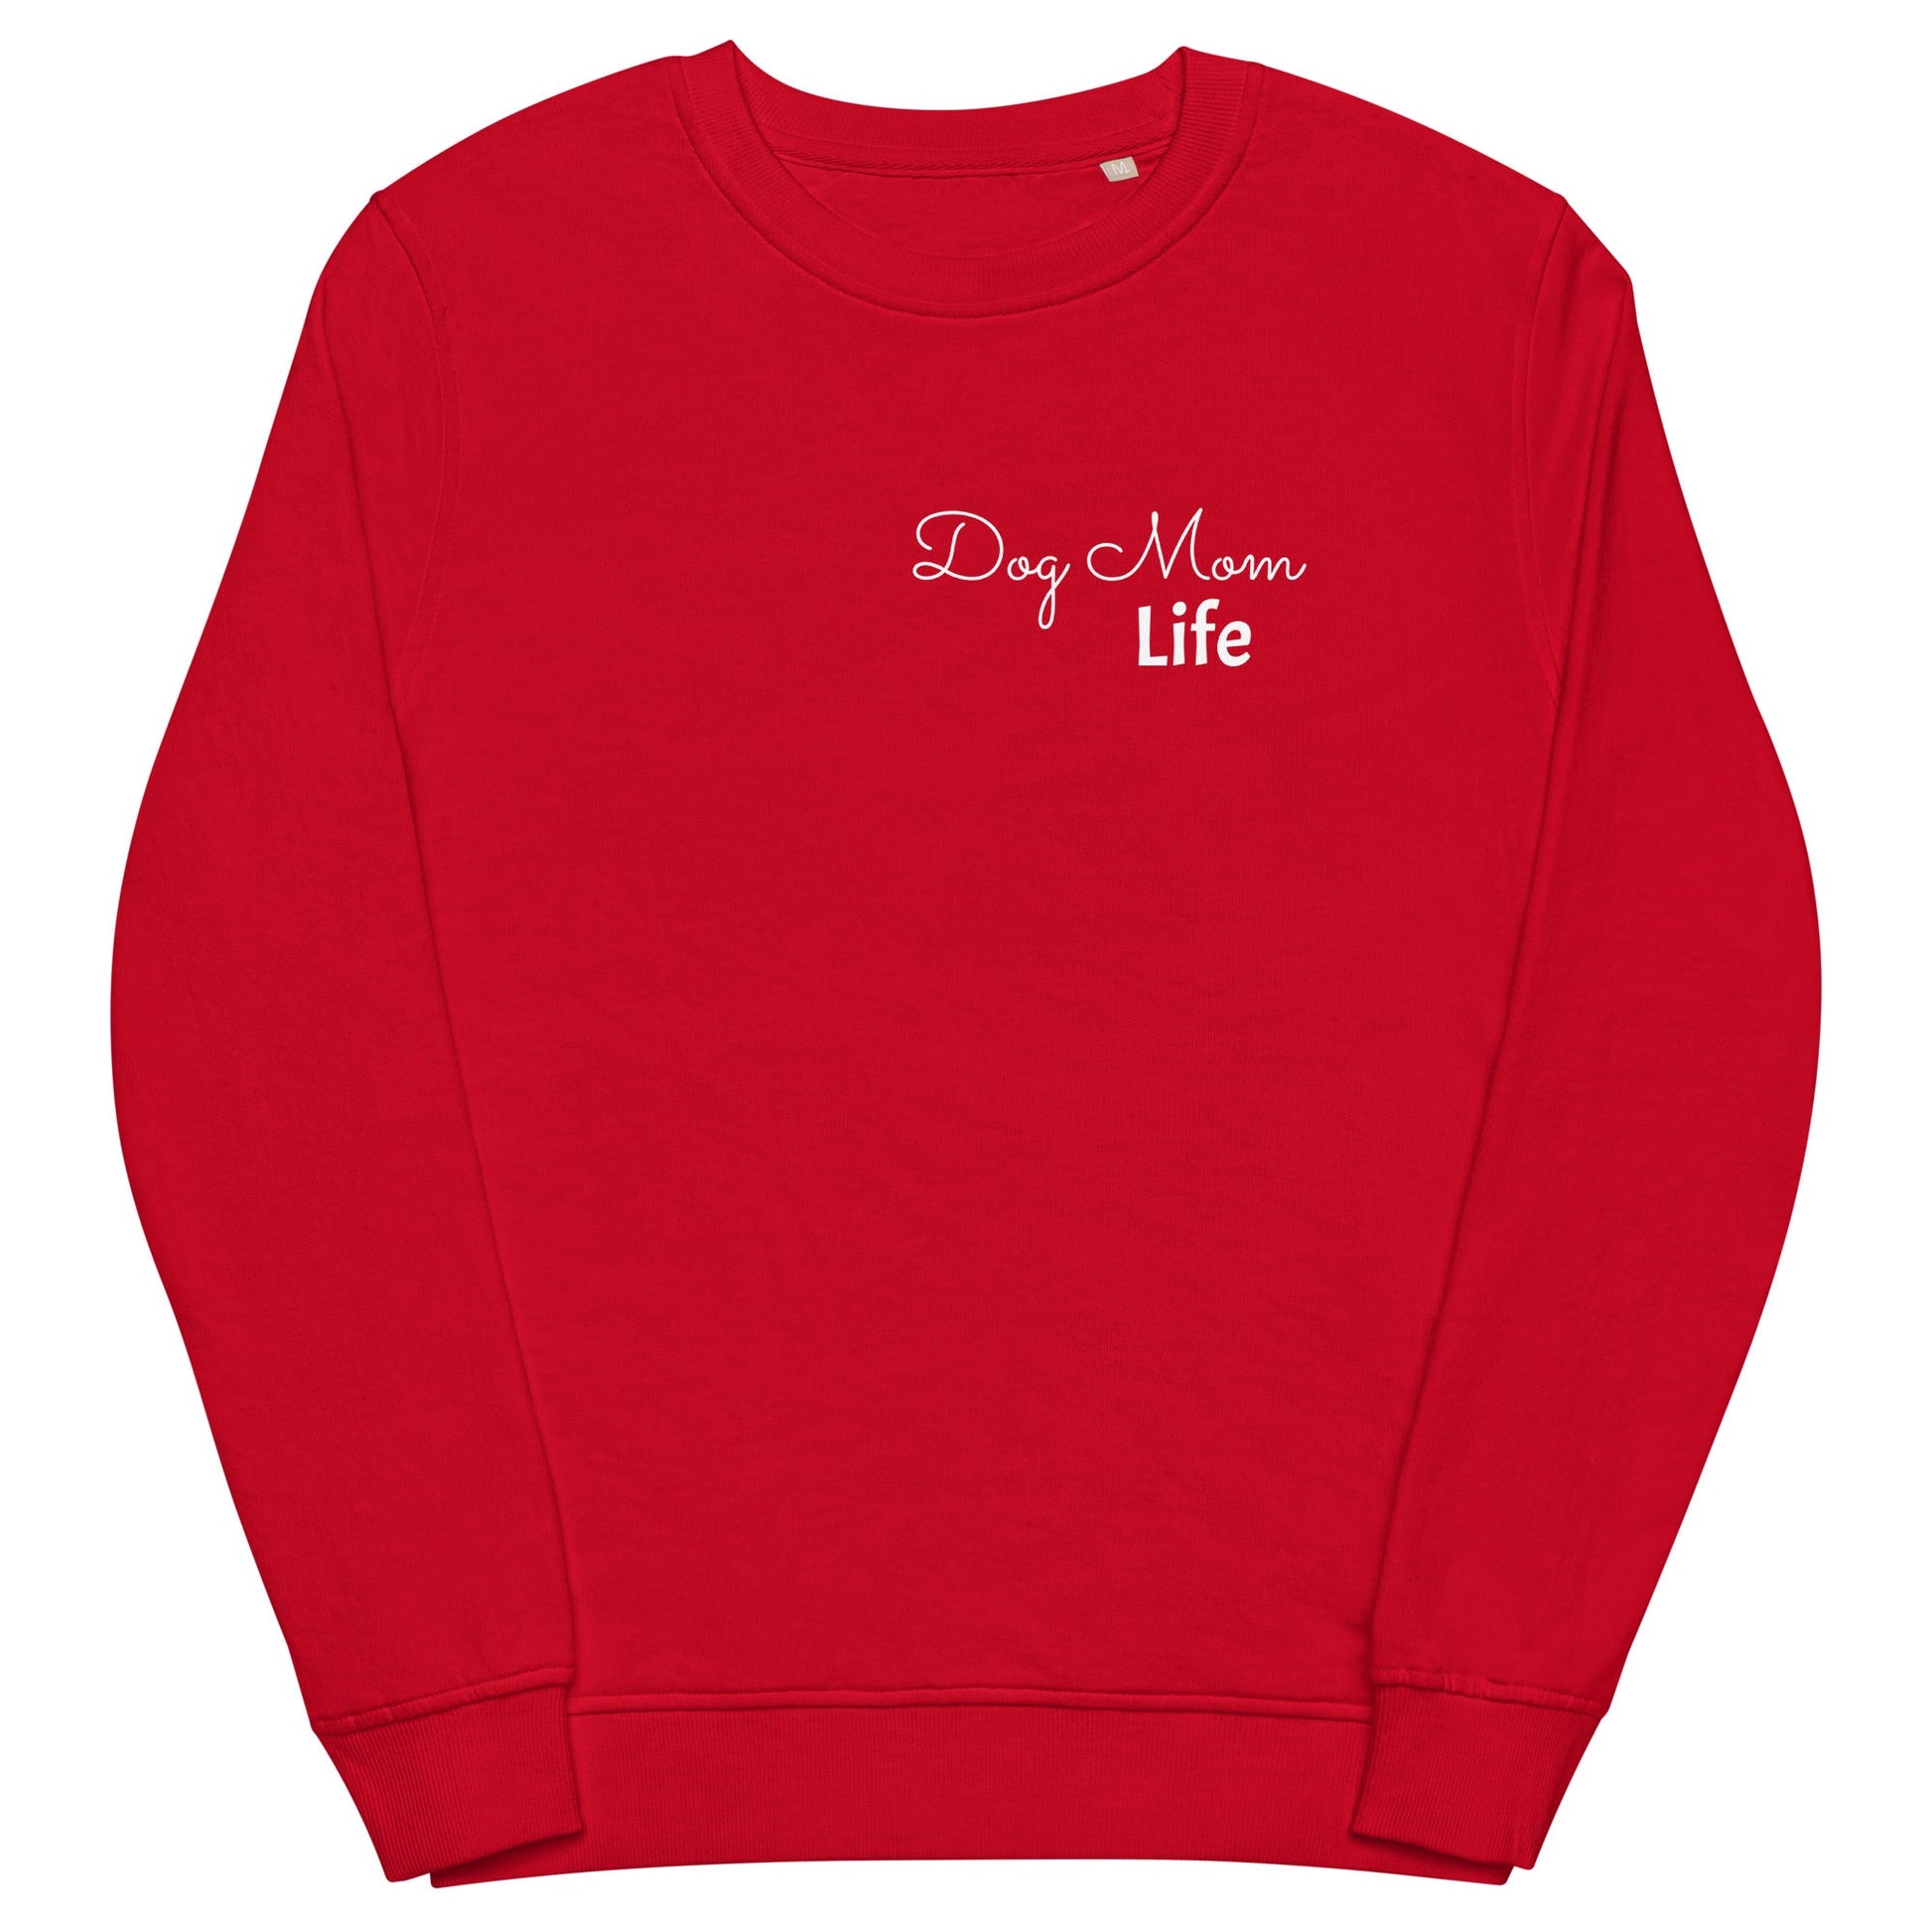 Dog Mom Daily Goals Sweatshirt - Red / S